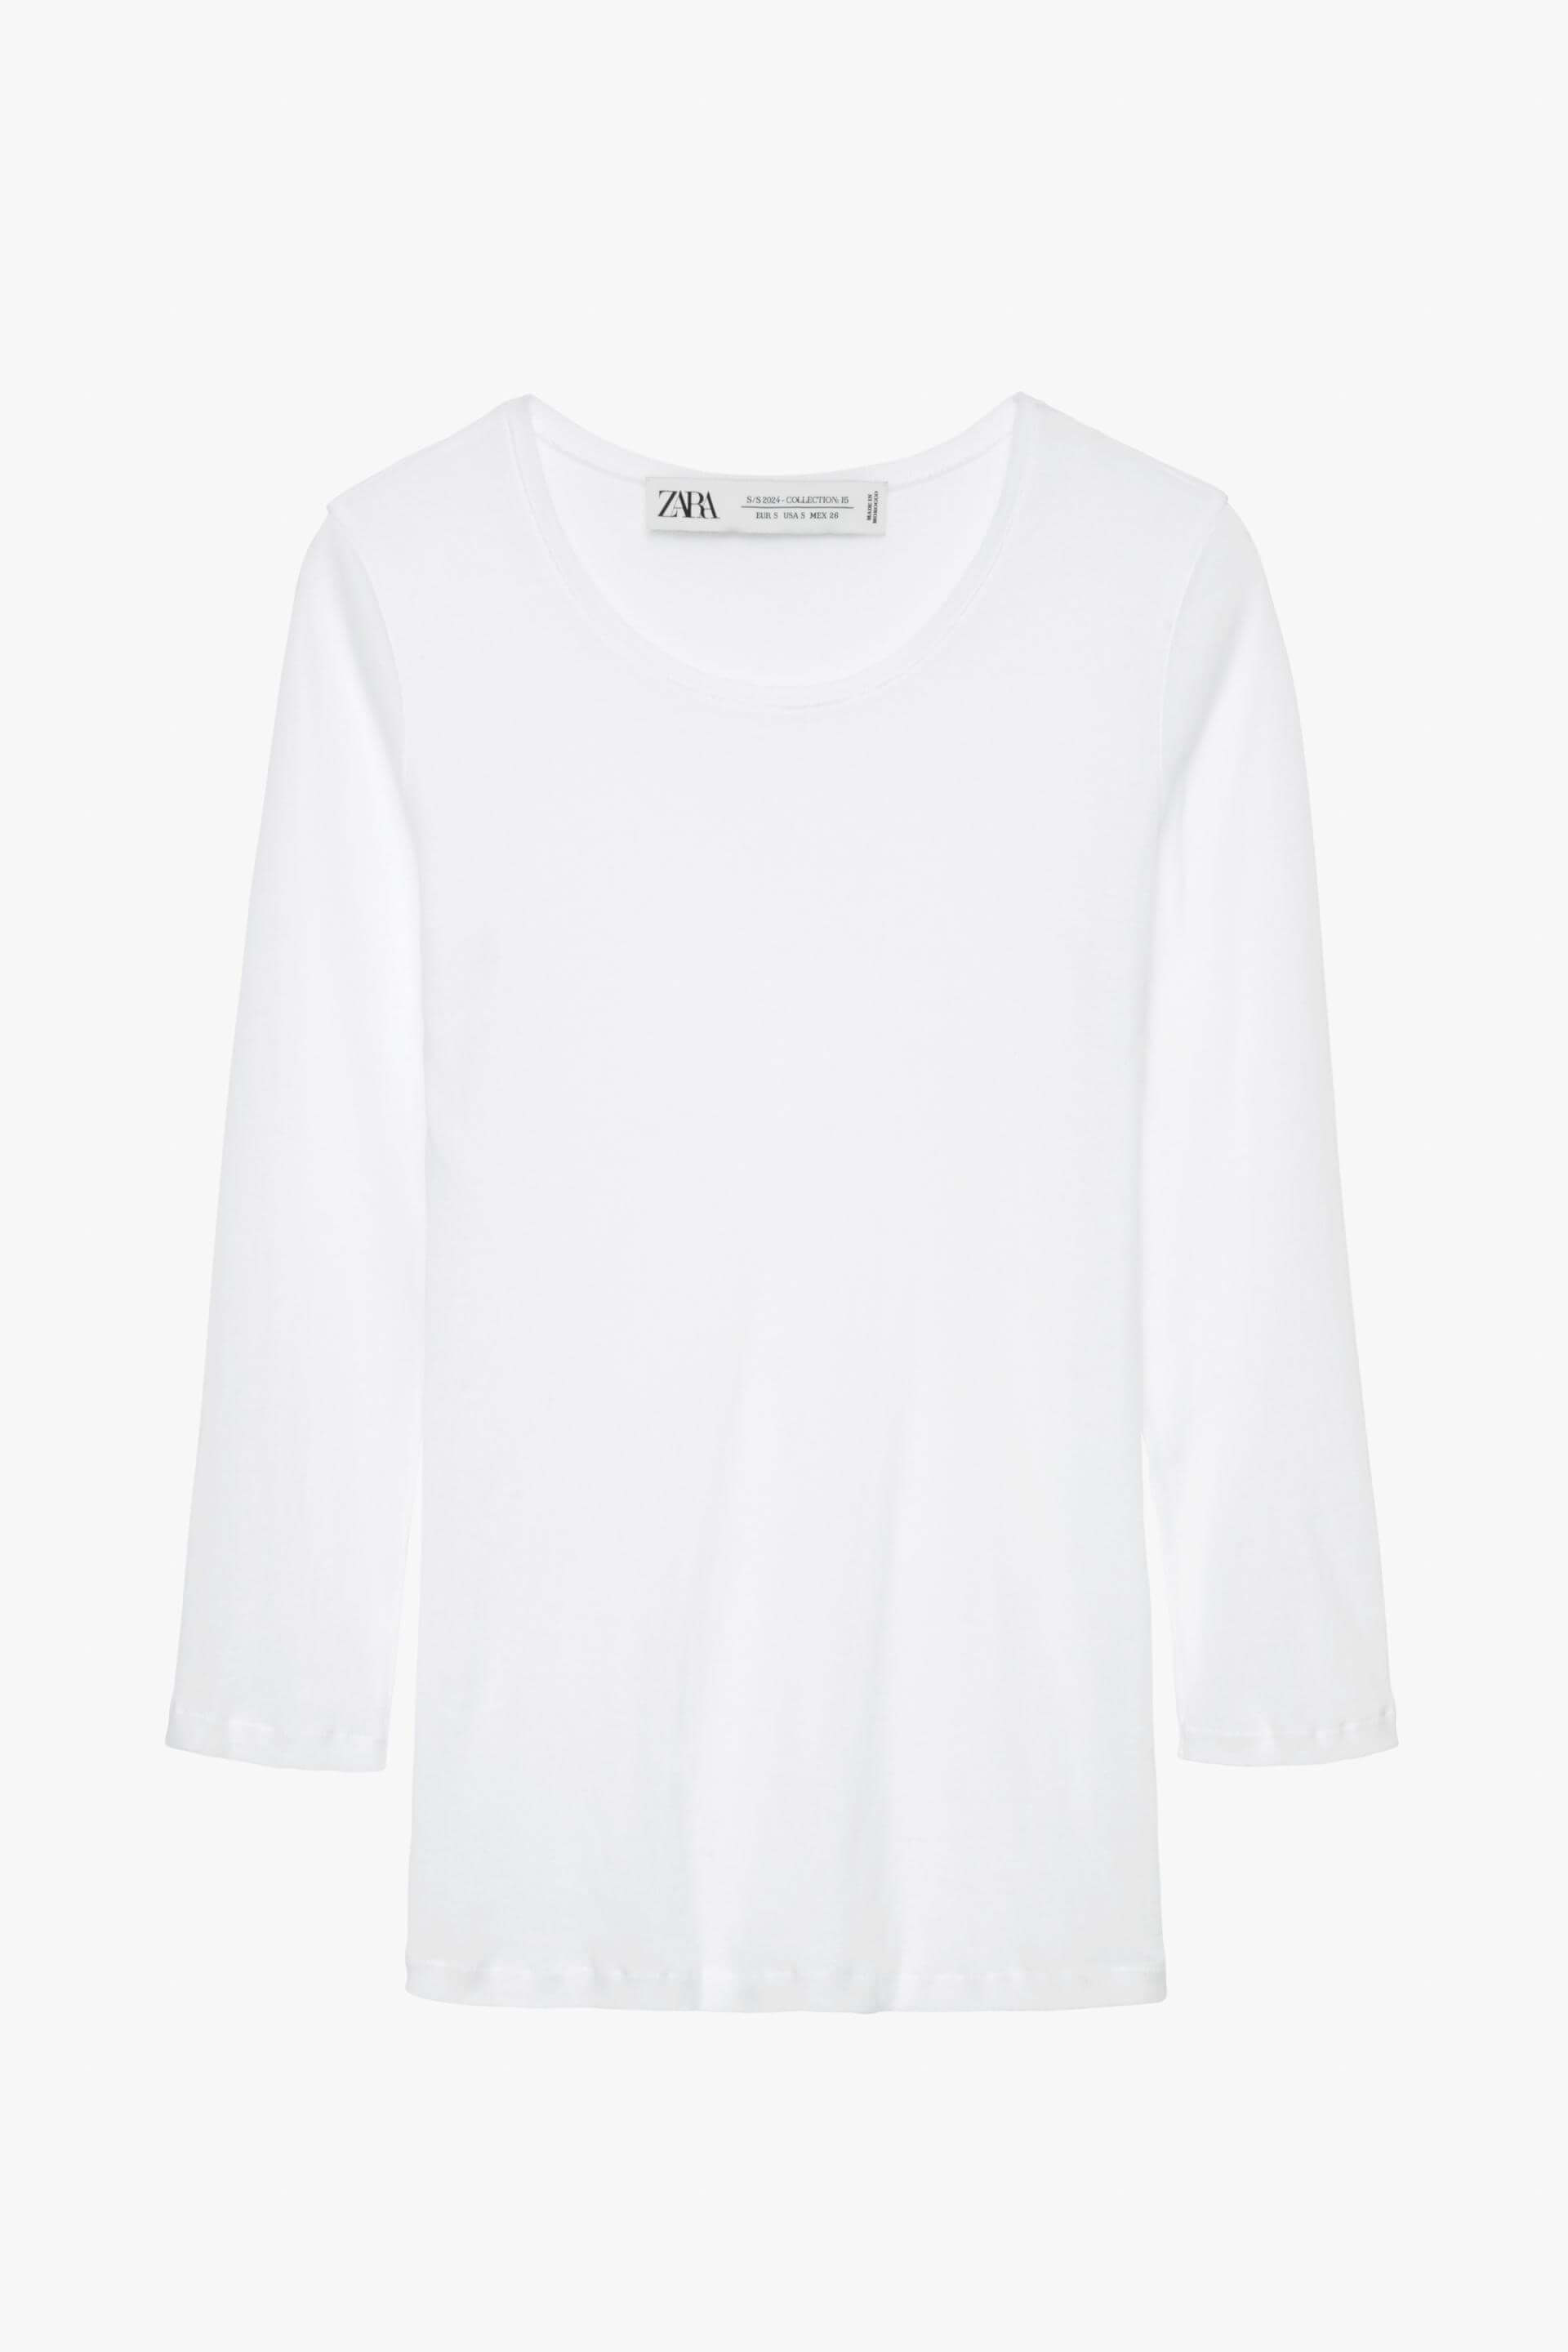 Рубашка Zara Supima Cotton - Limited Edition, белый футболка zara embroidery limited edition белый